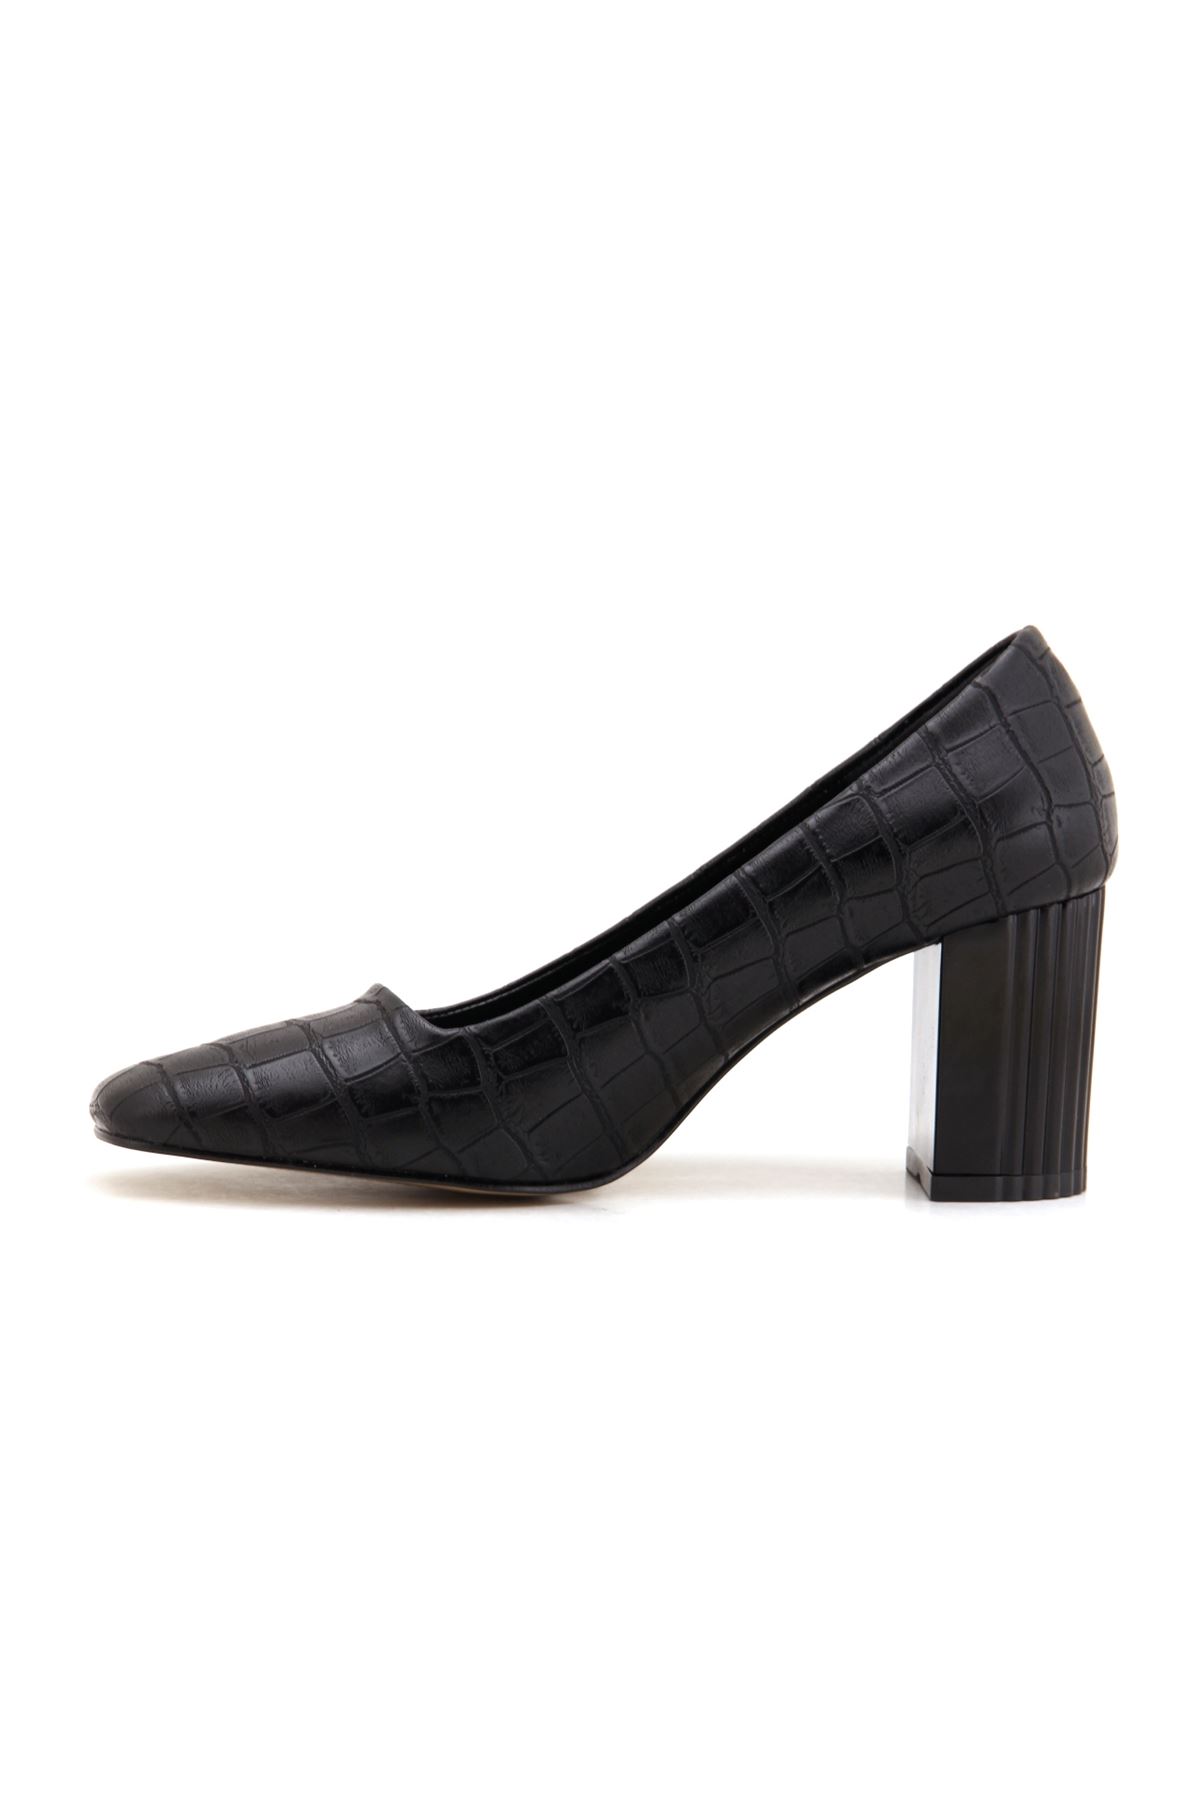 L&L 115 Topuklu Kadın Ayakkabı  - Siyah